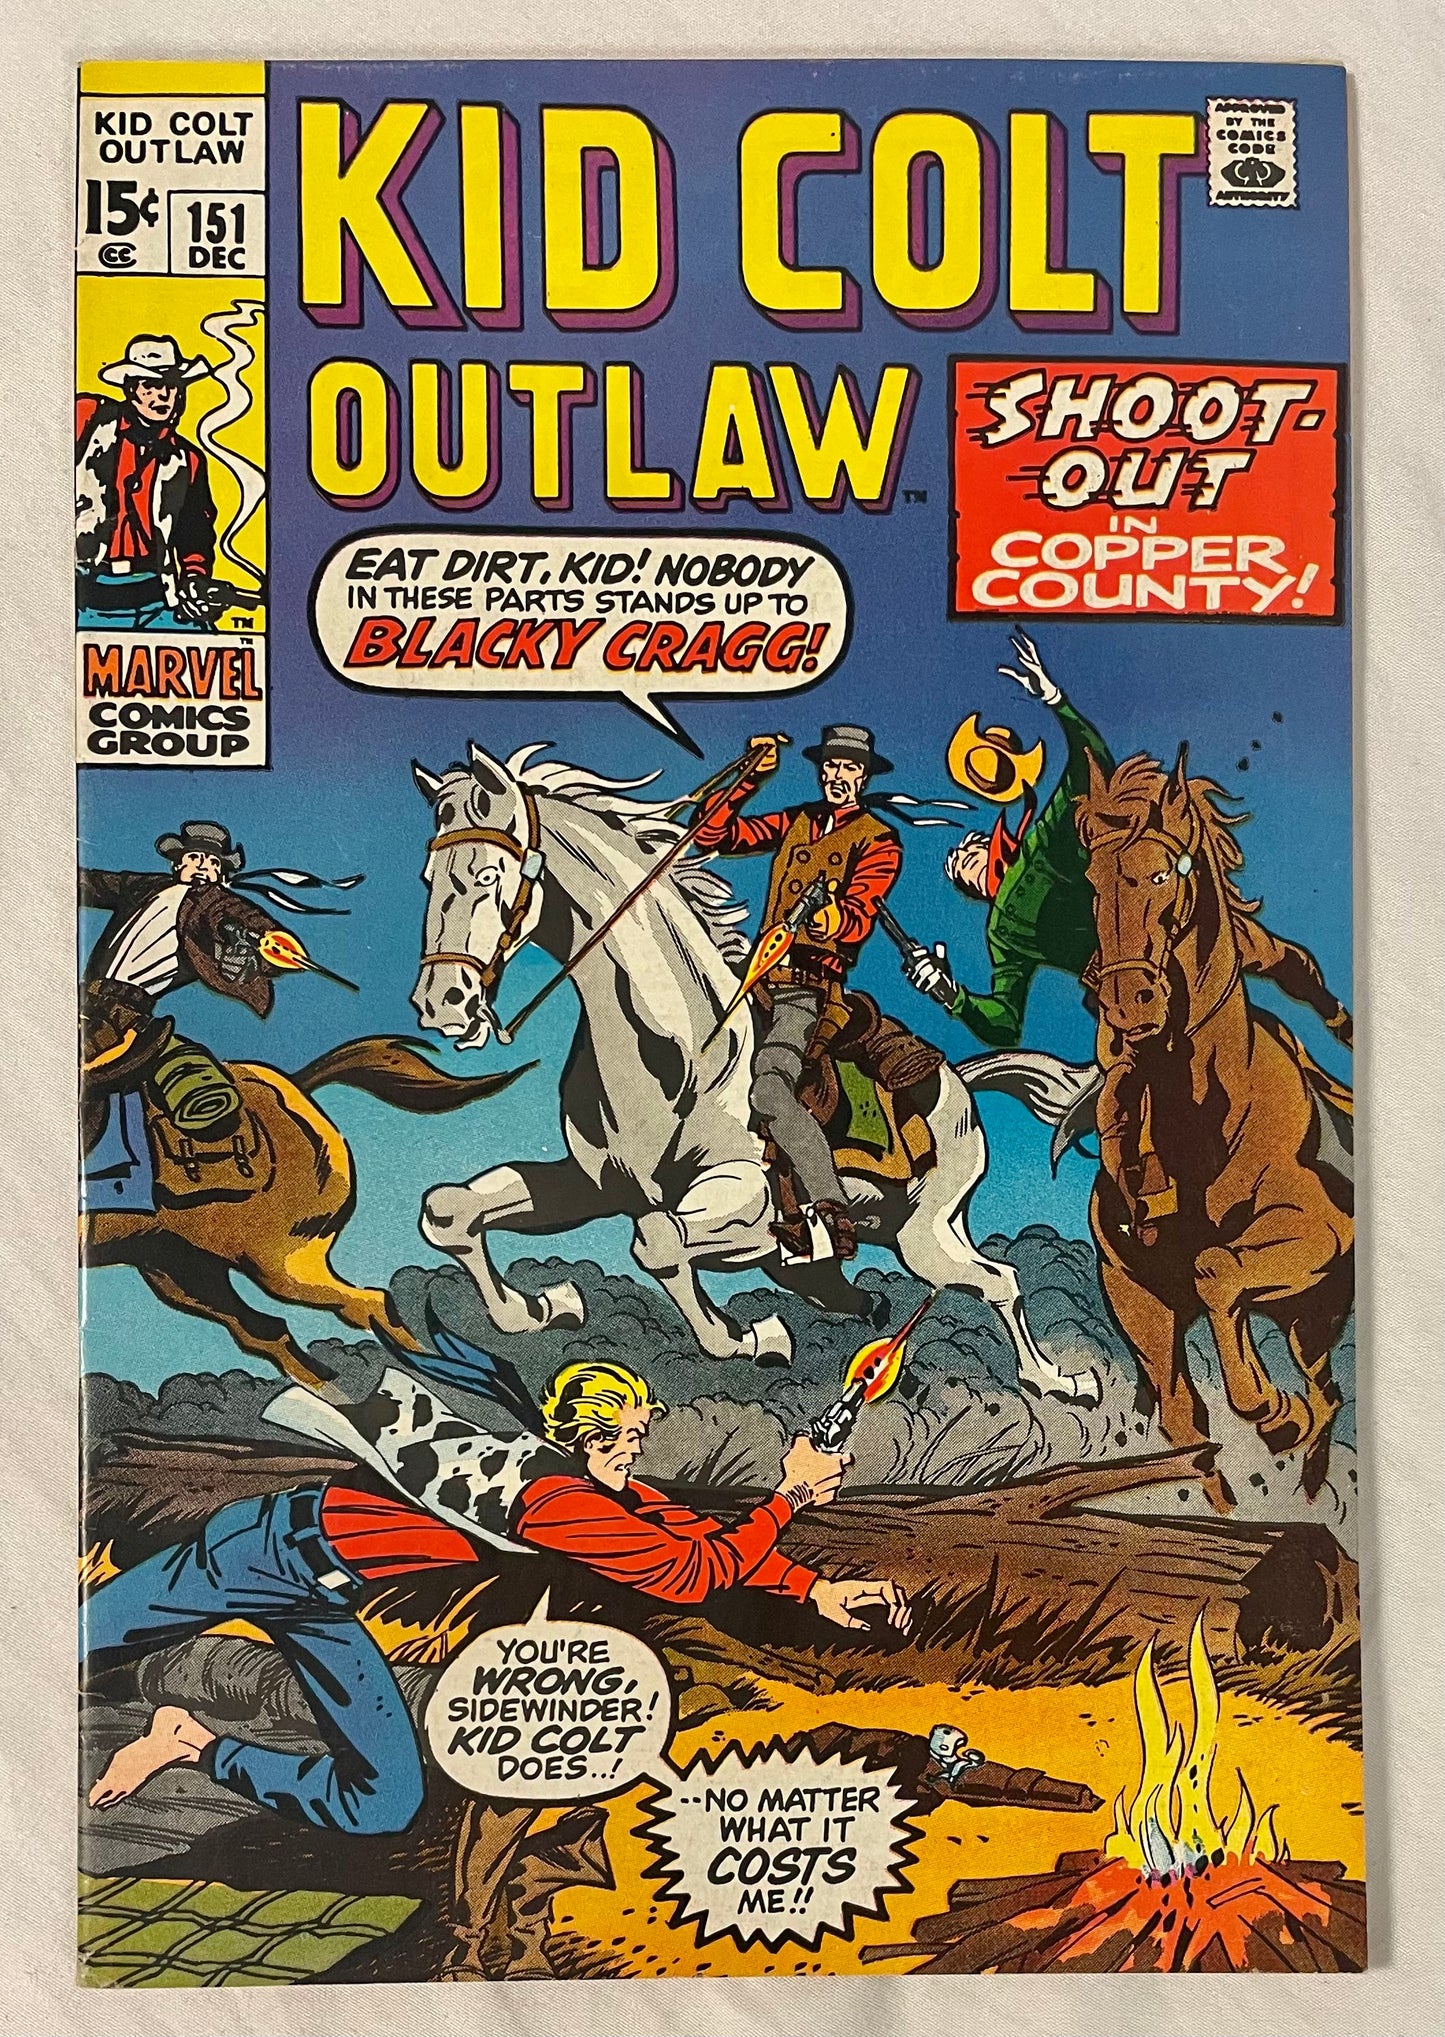 Marvel Comics Kid Colt Outlaw #151